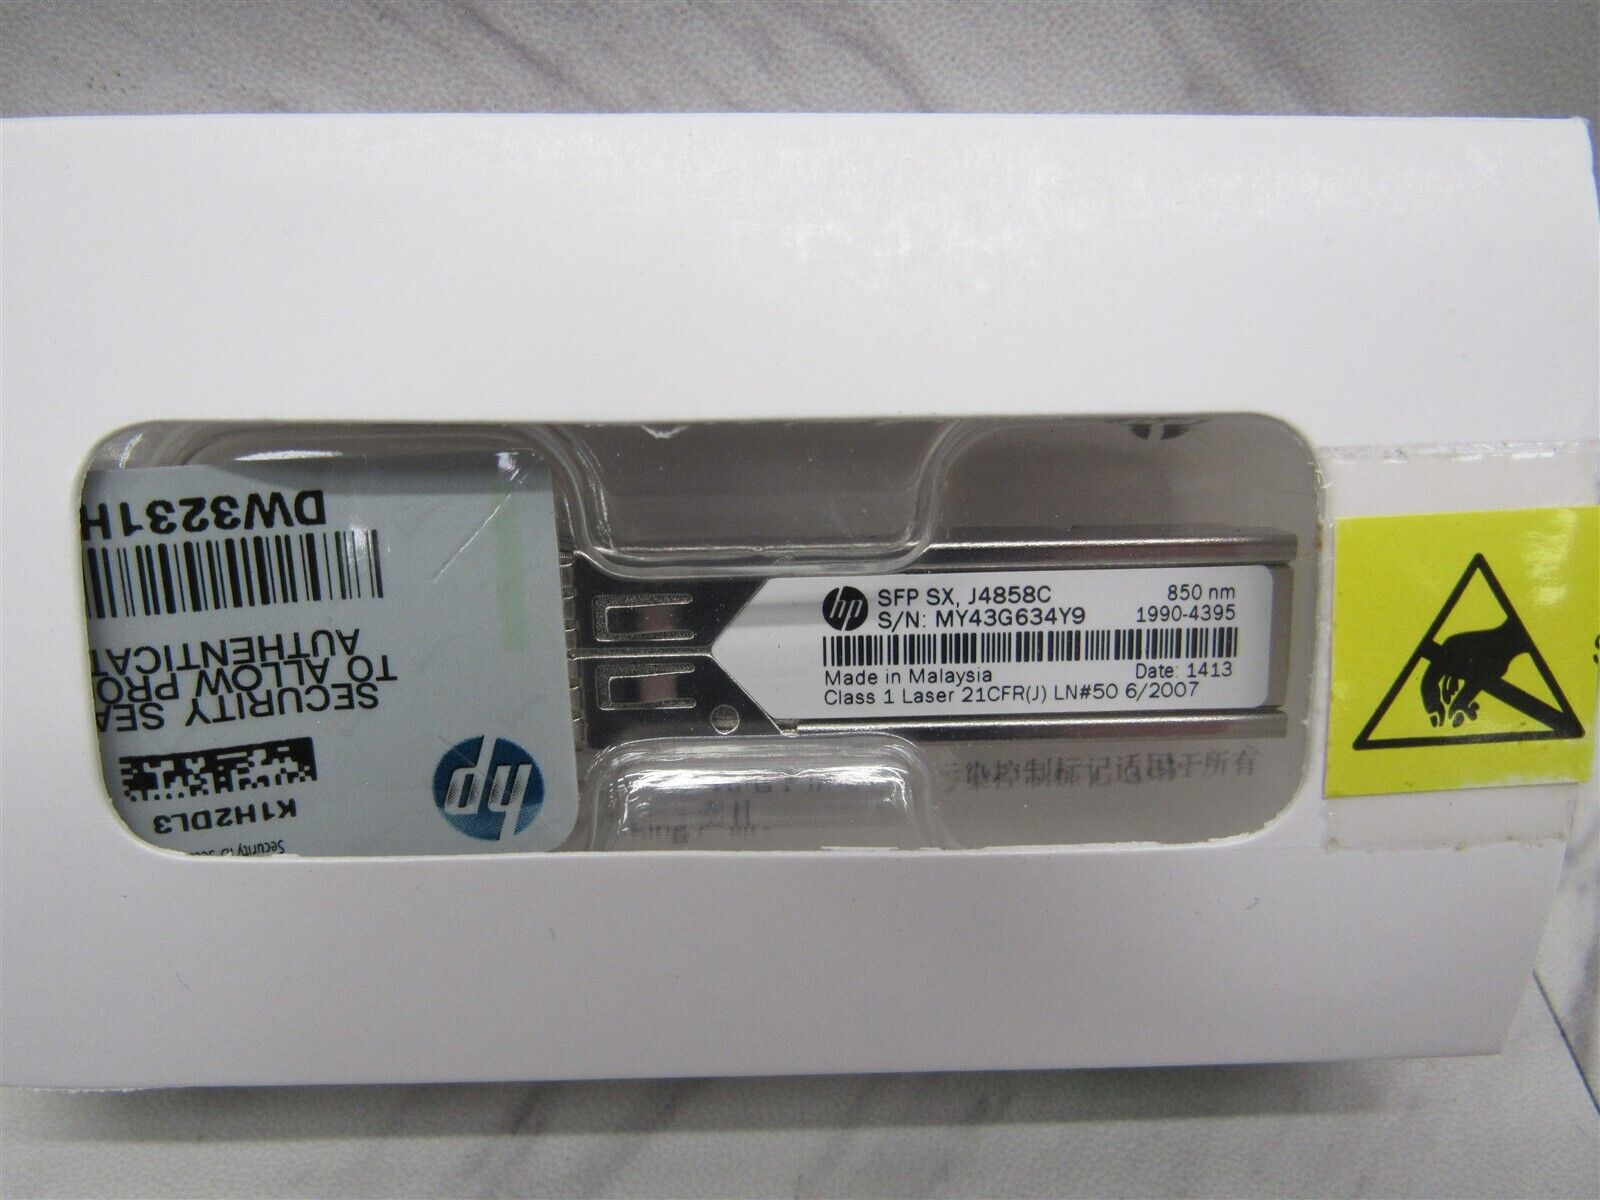 NEW Genuine HP J4858C 1000BASE-SX 1GB LC SFP Gigabit Fiber Transceiver Module